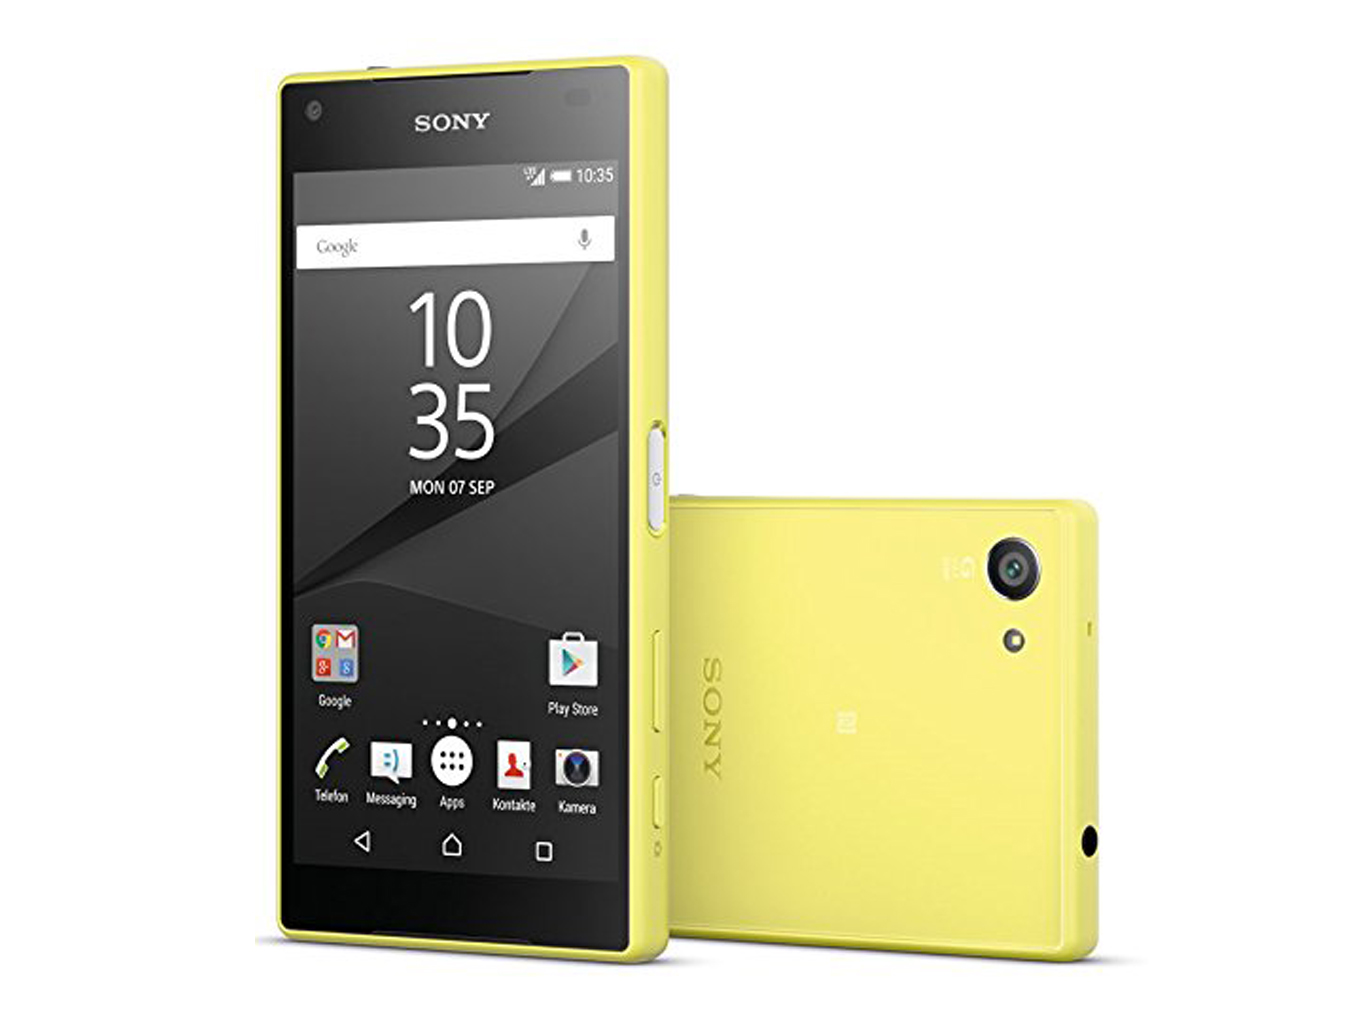 cliënt Knikken venijn Sony Xperia Z5 Compact Smartphone Review - NotebookCheck.net Reviews